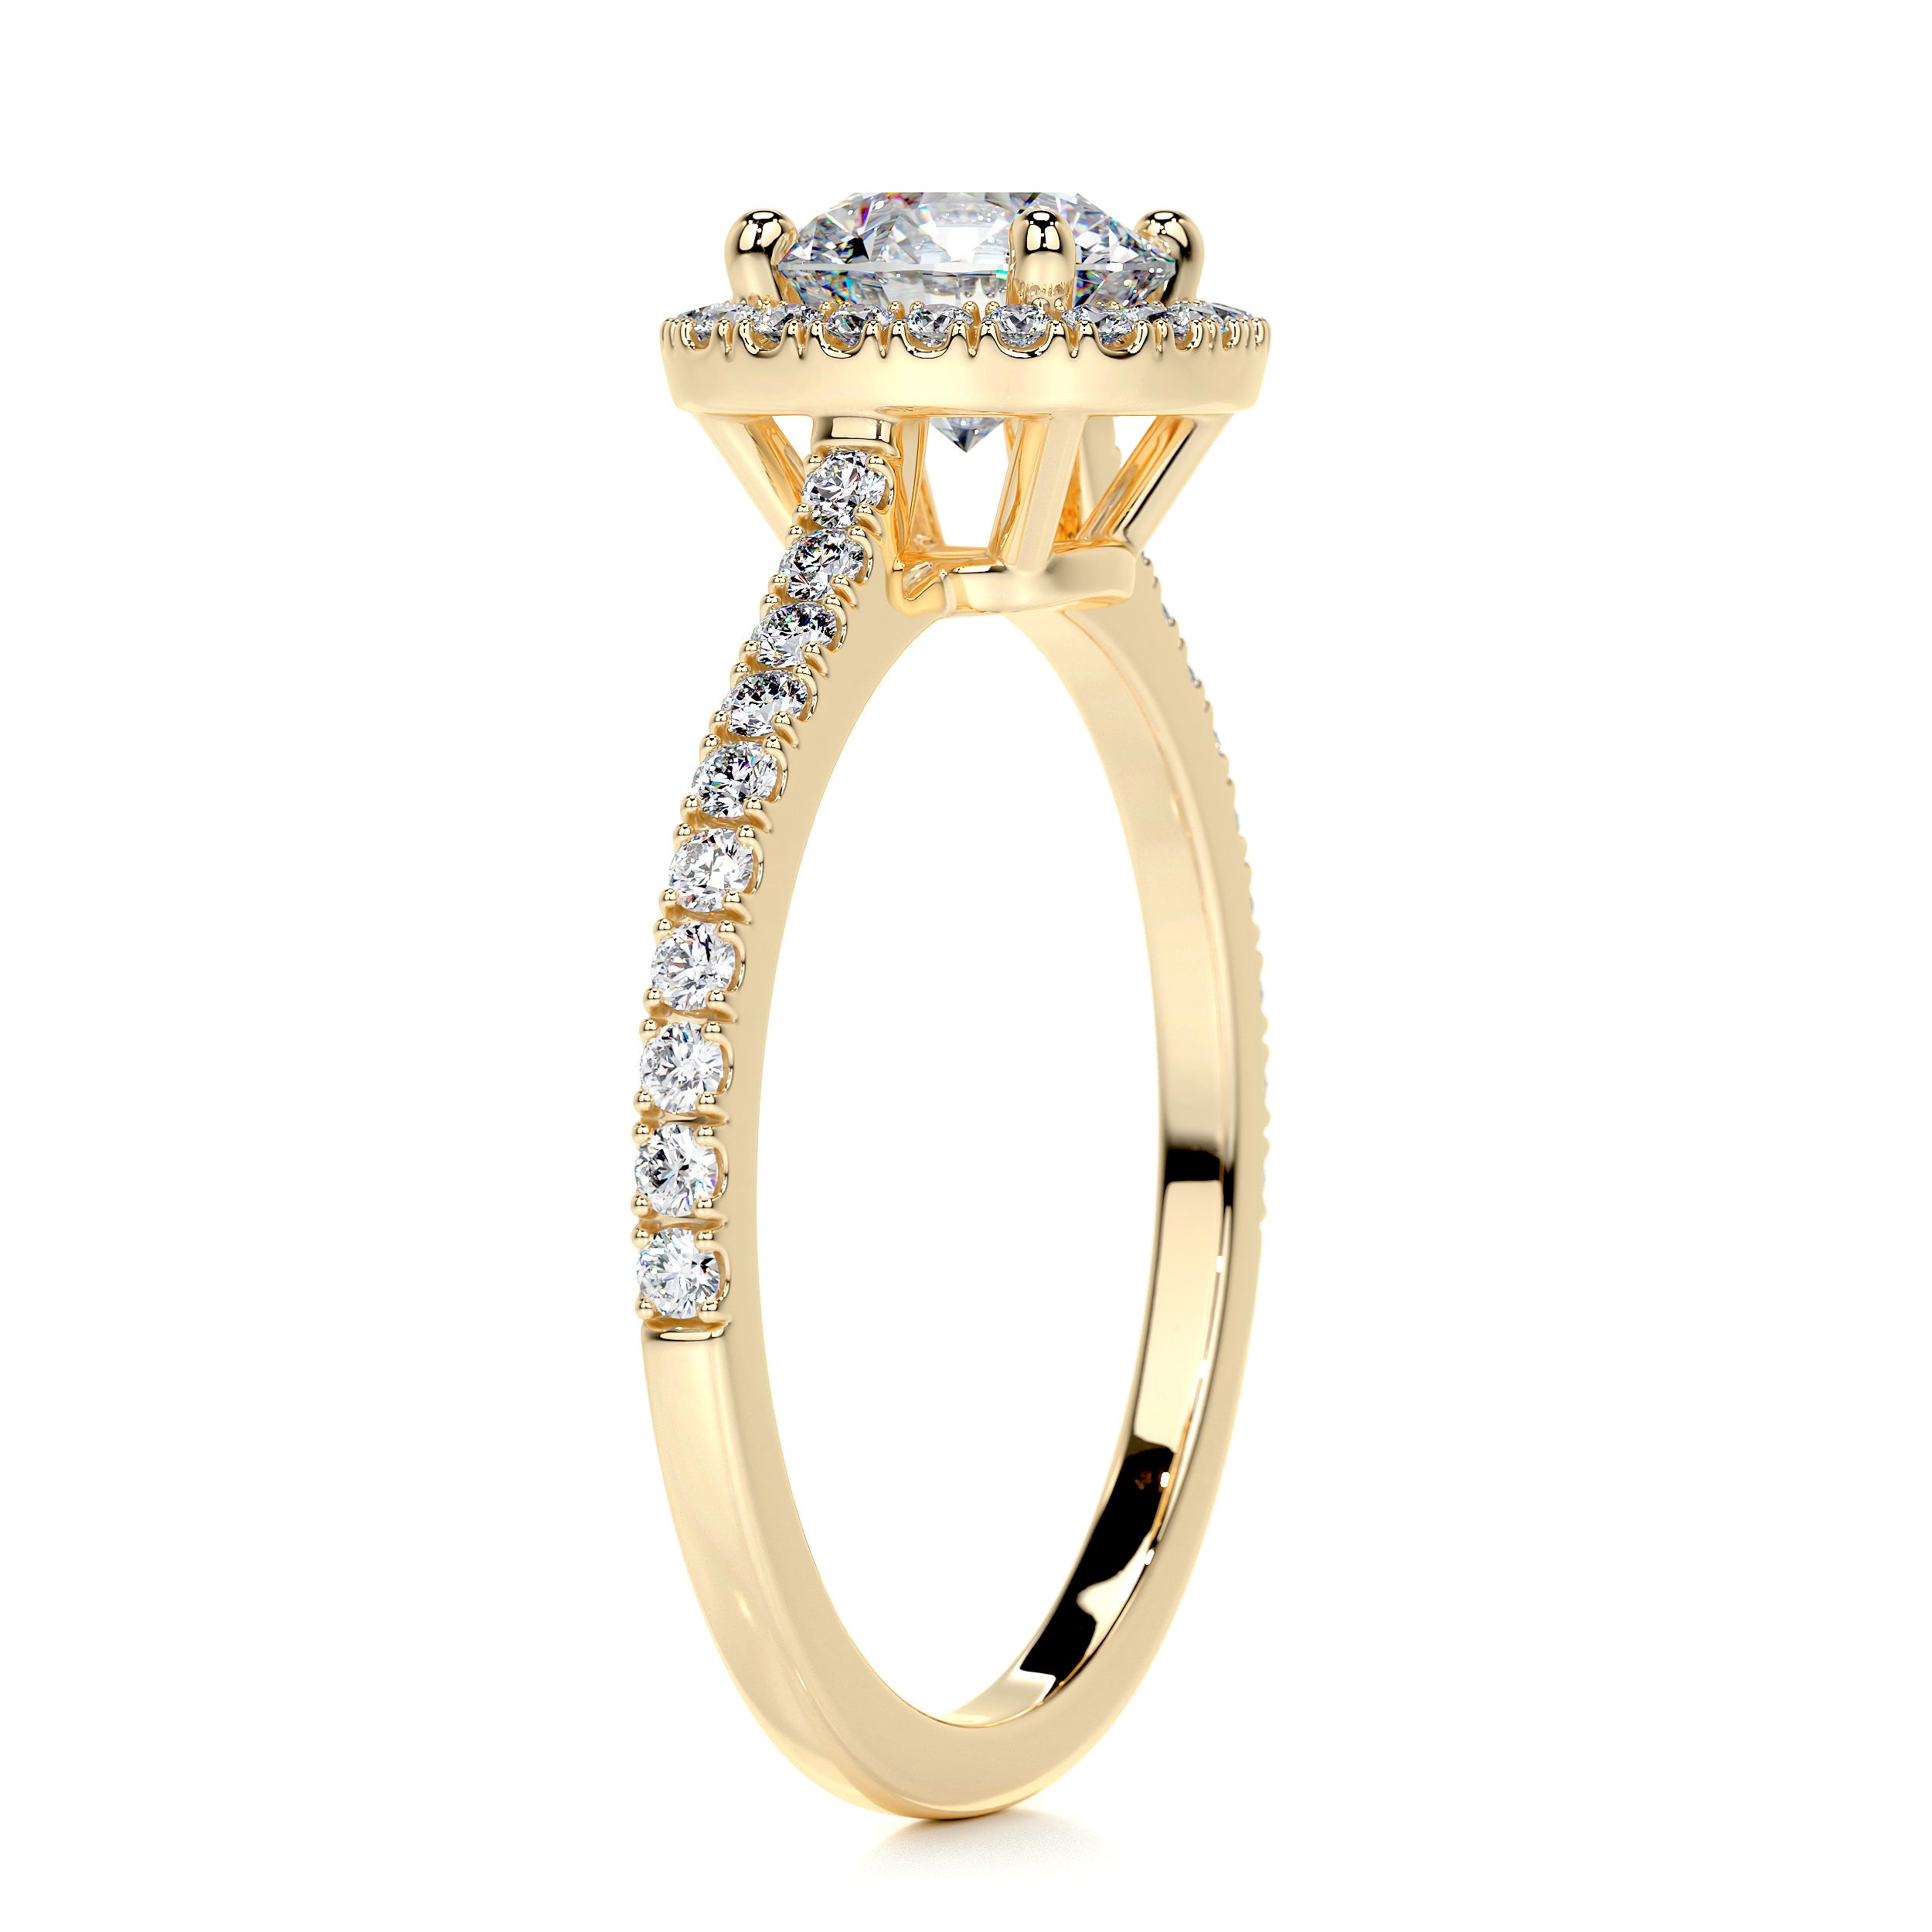 Claudia Diamond Engagement Ring   (1.35 Carat) -18K Yellow Gold